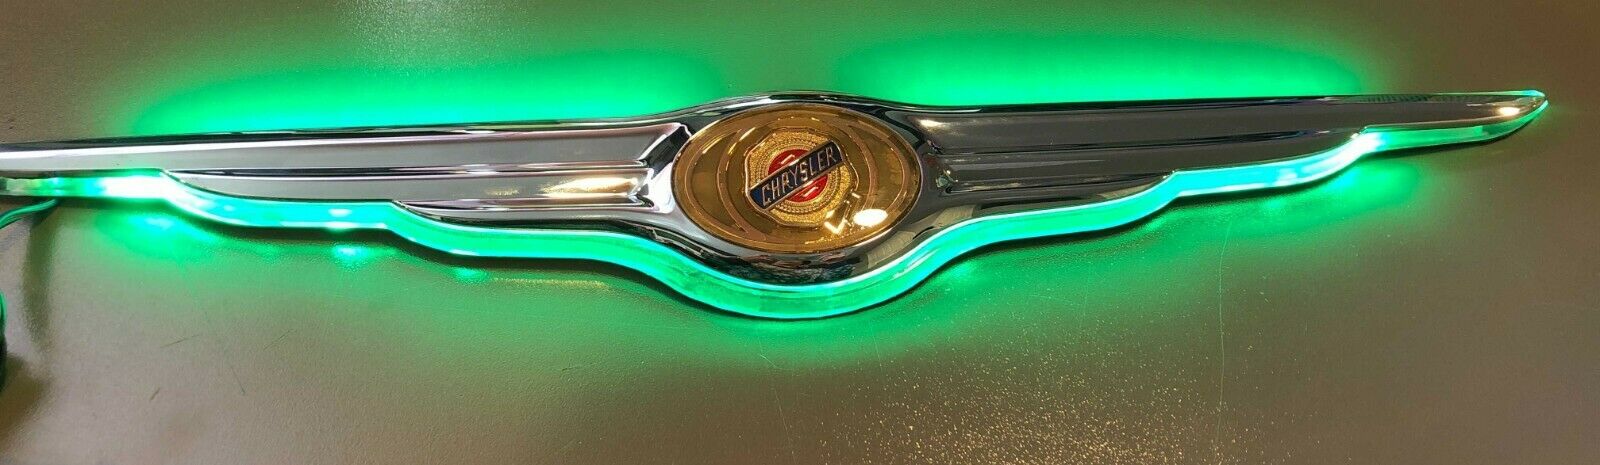 Oracle Gen I Chrysler Illuminated LED Colorshift Rear Wing Emblem - 3002-333 - CLEARANCE